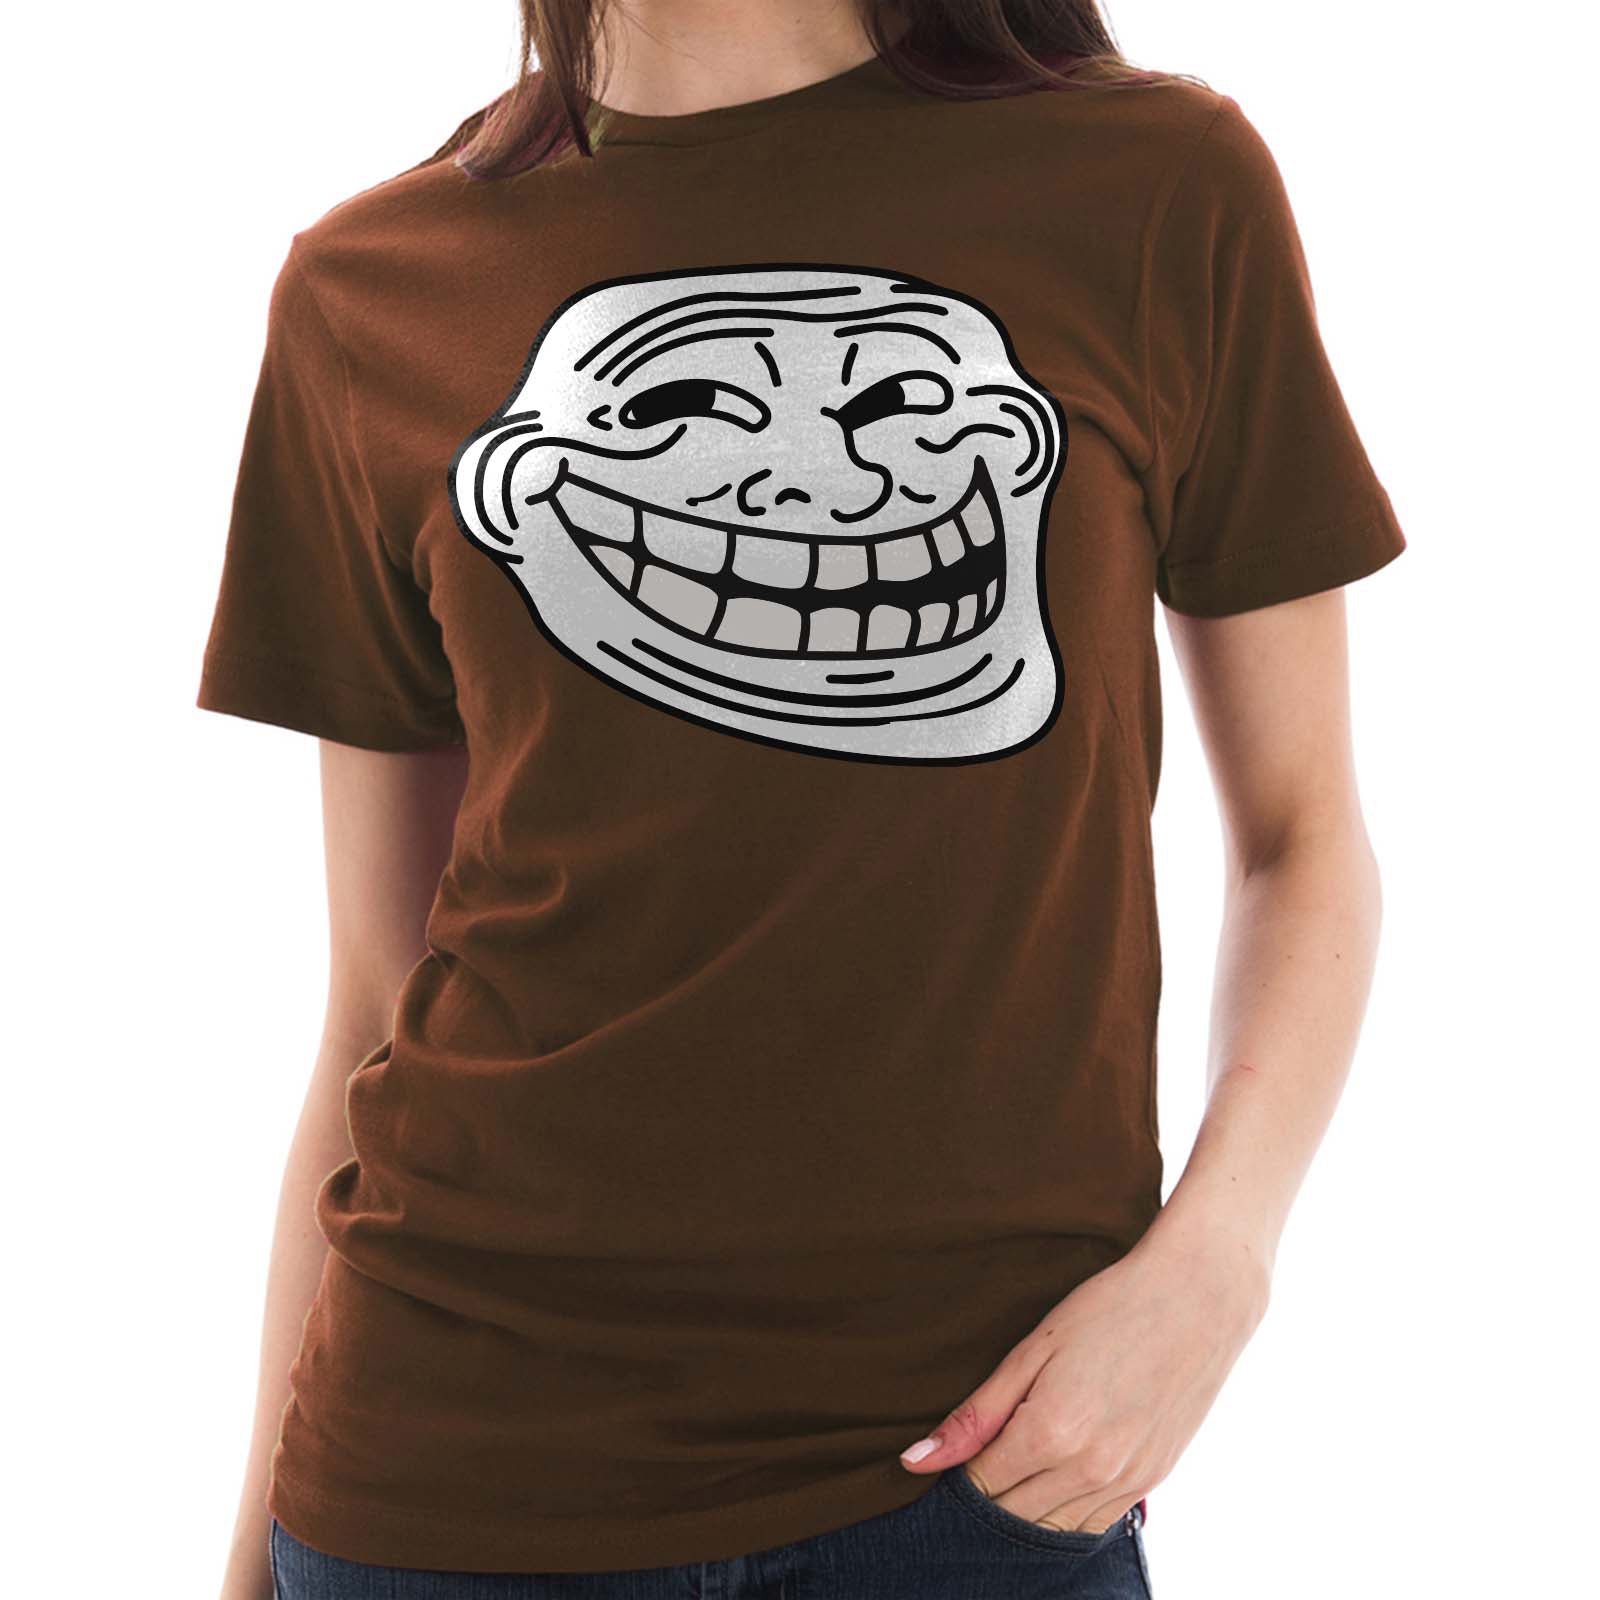 Trollface PNG Designs for T Shirt & Merch